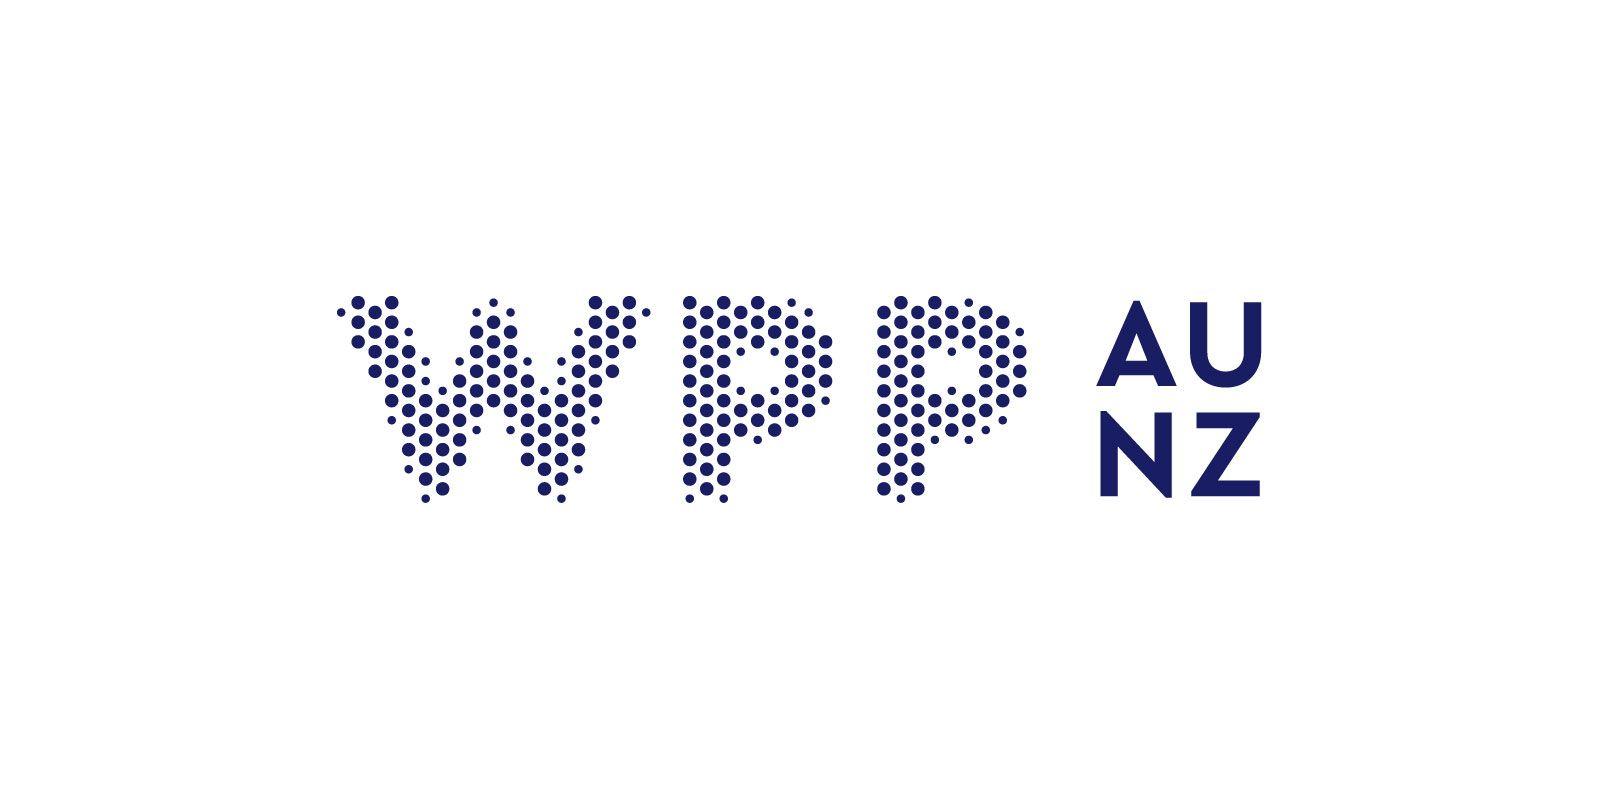 WPP Logo - Wpp Logo | www.topsimages.com